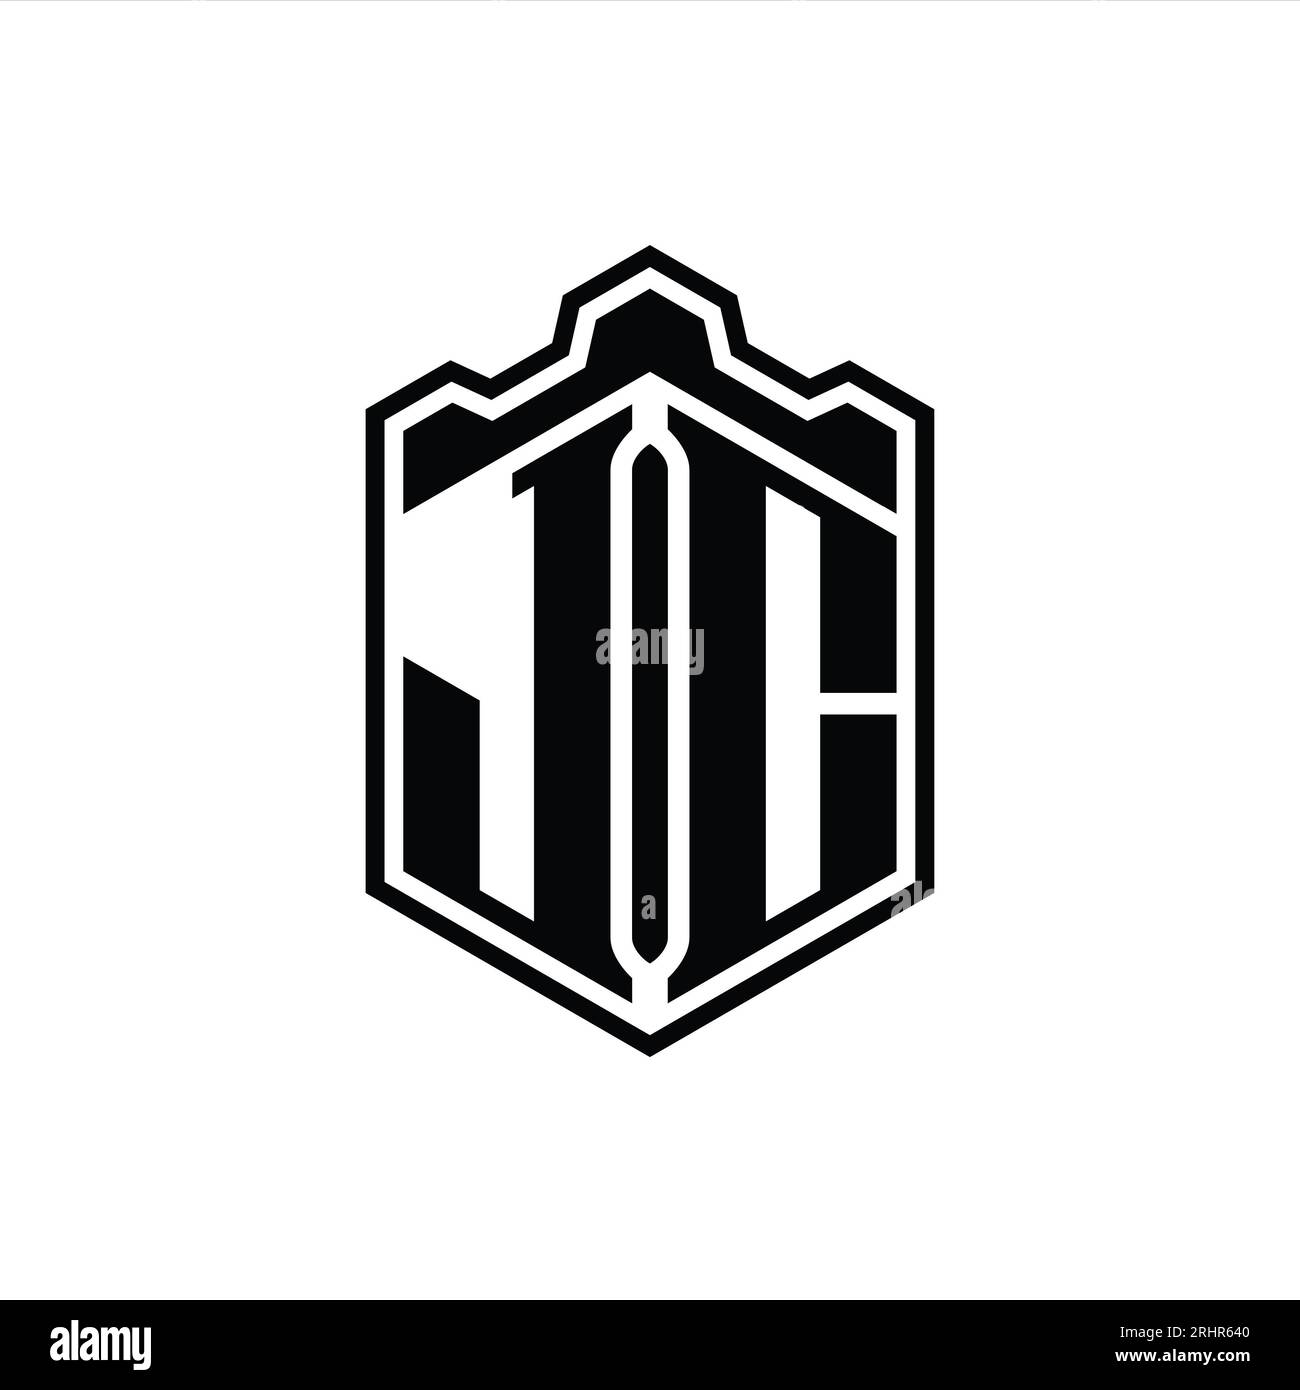 JC Letter Logo monogram hexagon shield shape crown castle geometric with outline style design template Stock Photo